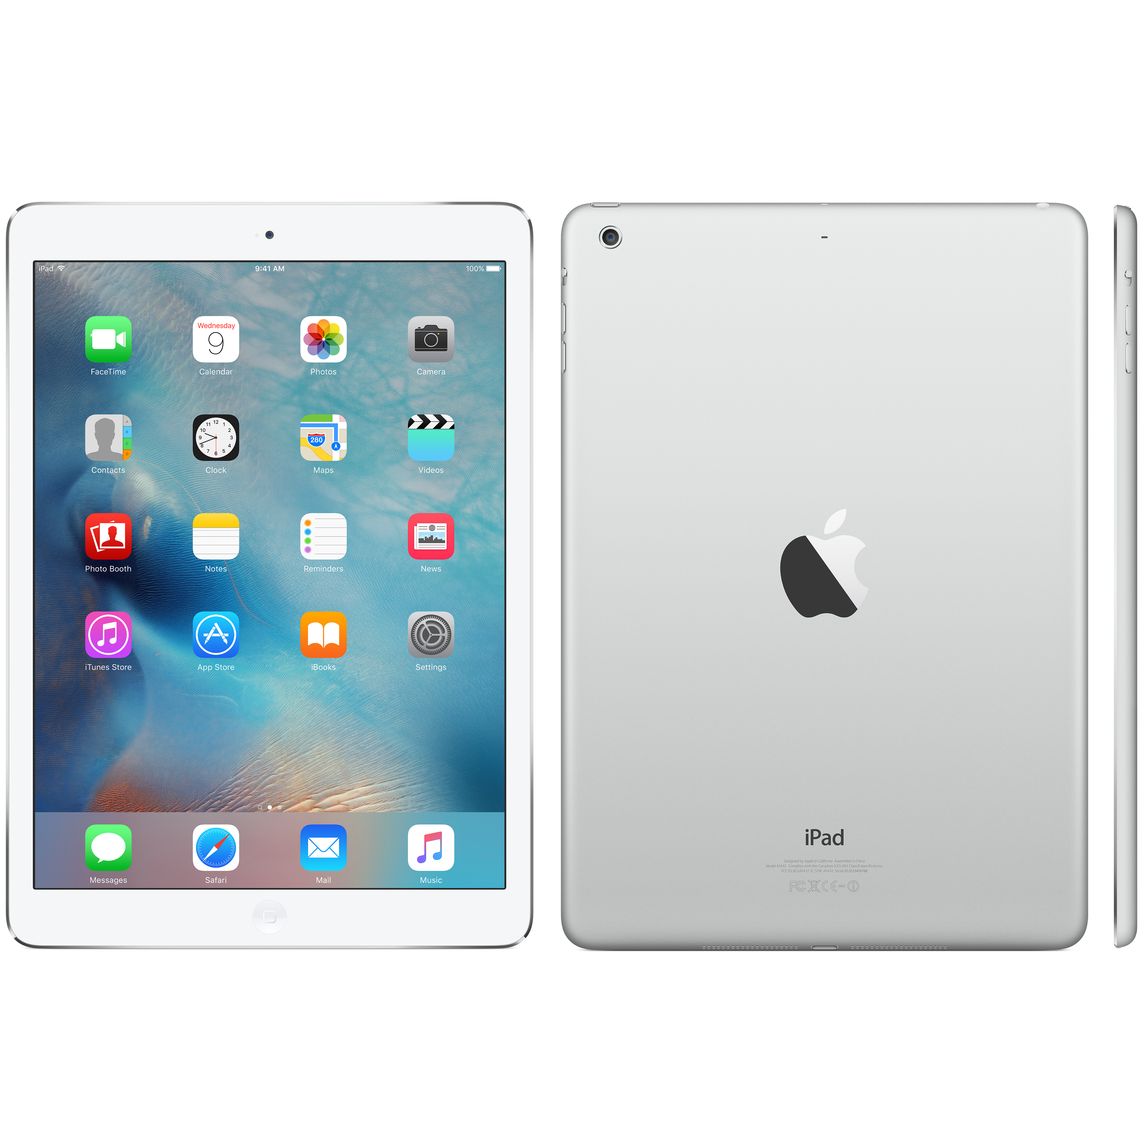 Buy Used & Refurbished Apple iPad Air with Wi-Fi 32GB - White & Silver